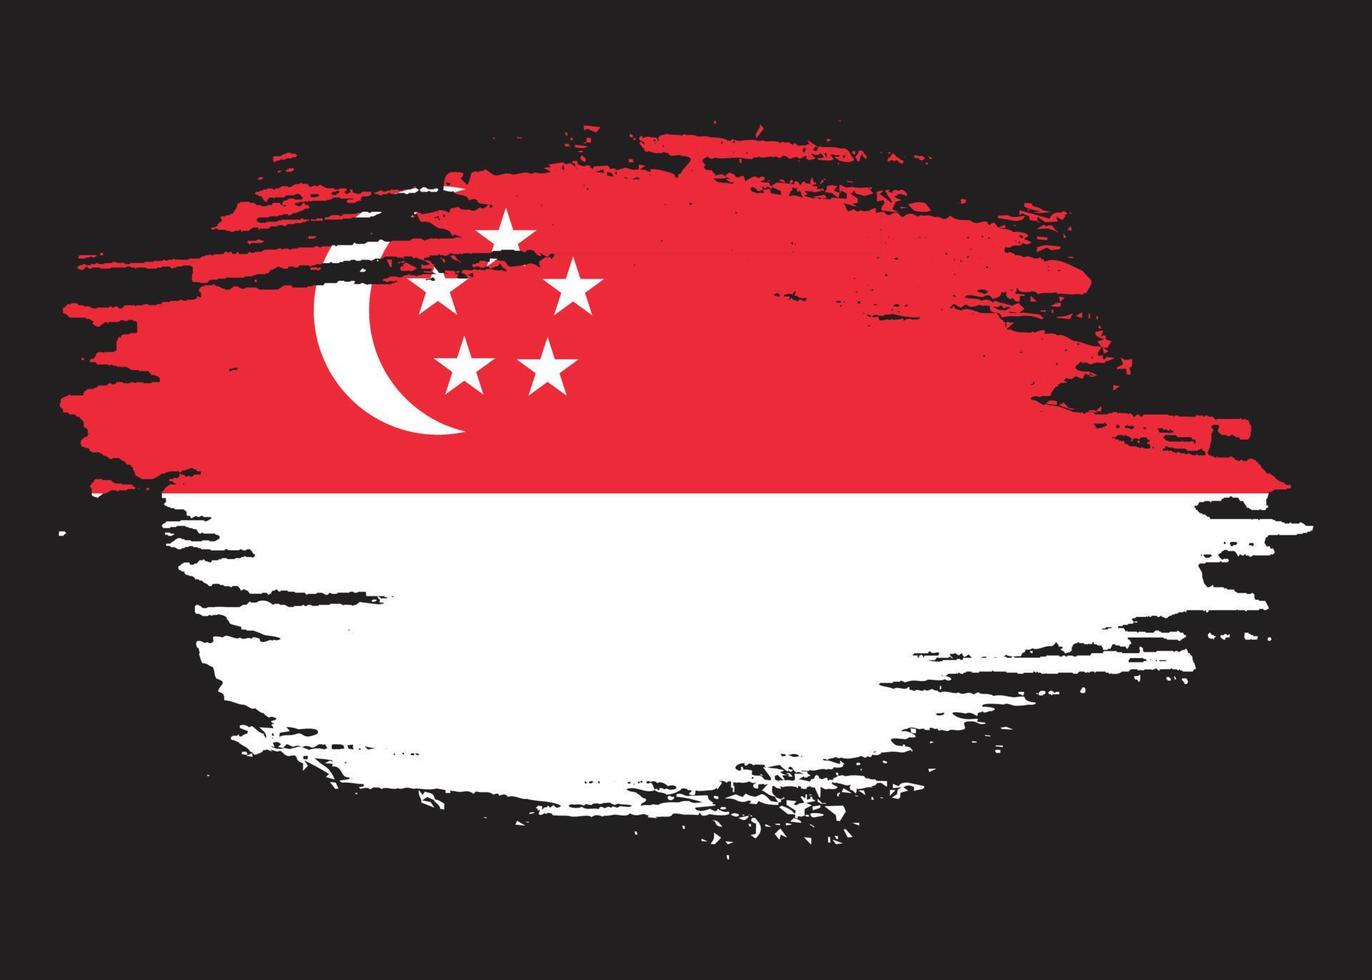 Free brush stroke Singapore flag vector image